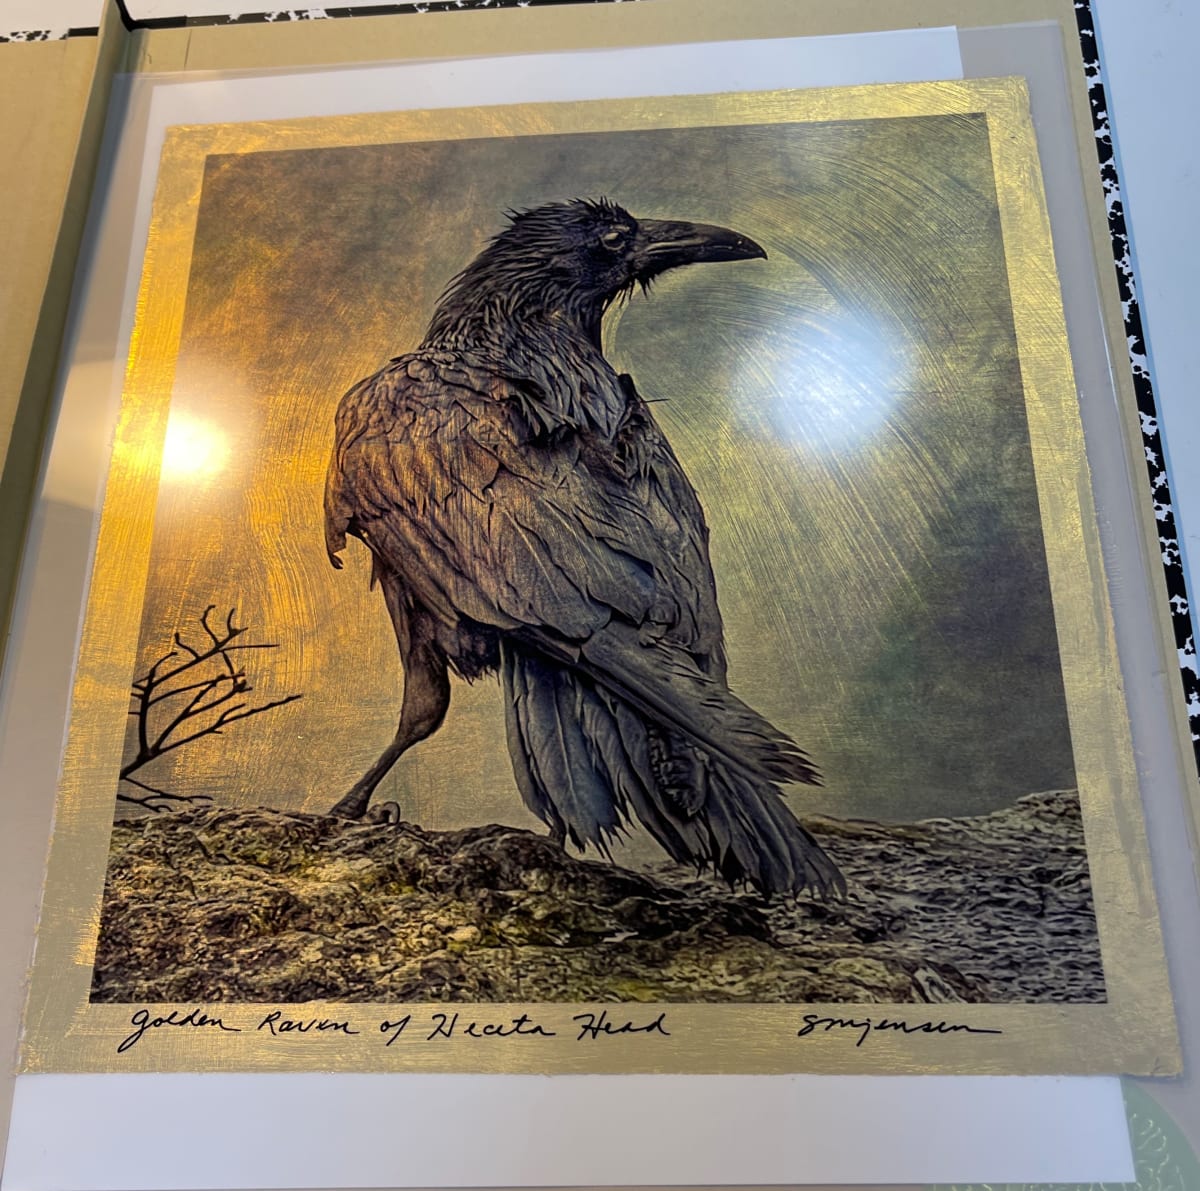 Golden Raven of Heceta Head by Sandy Brown Jensen  Image: Golden Raven of Heceta Head